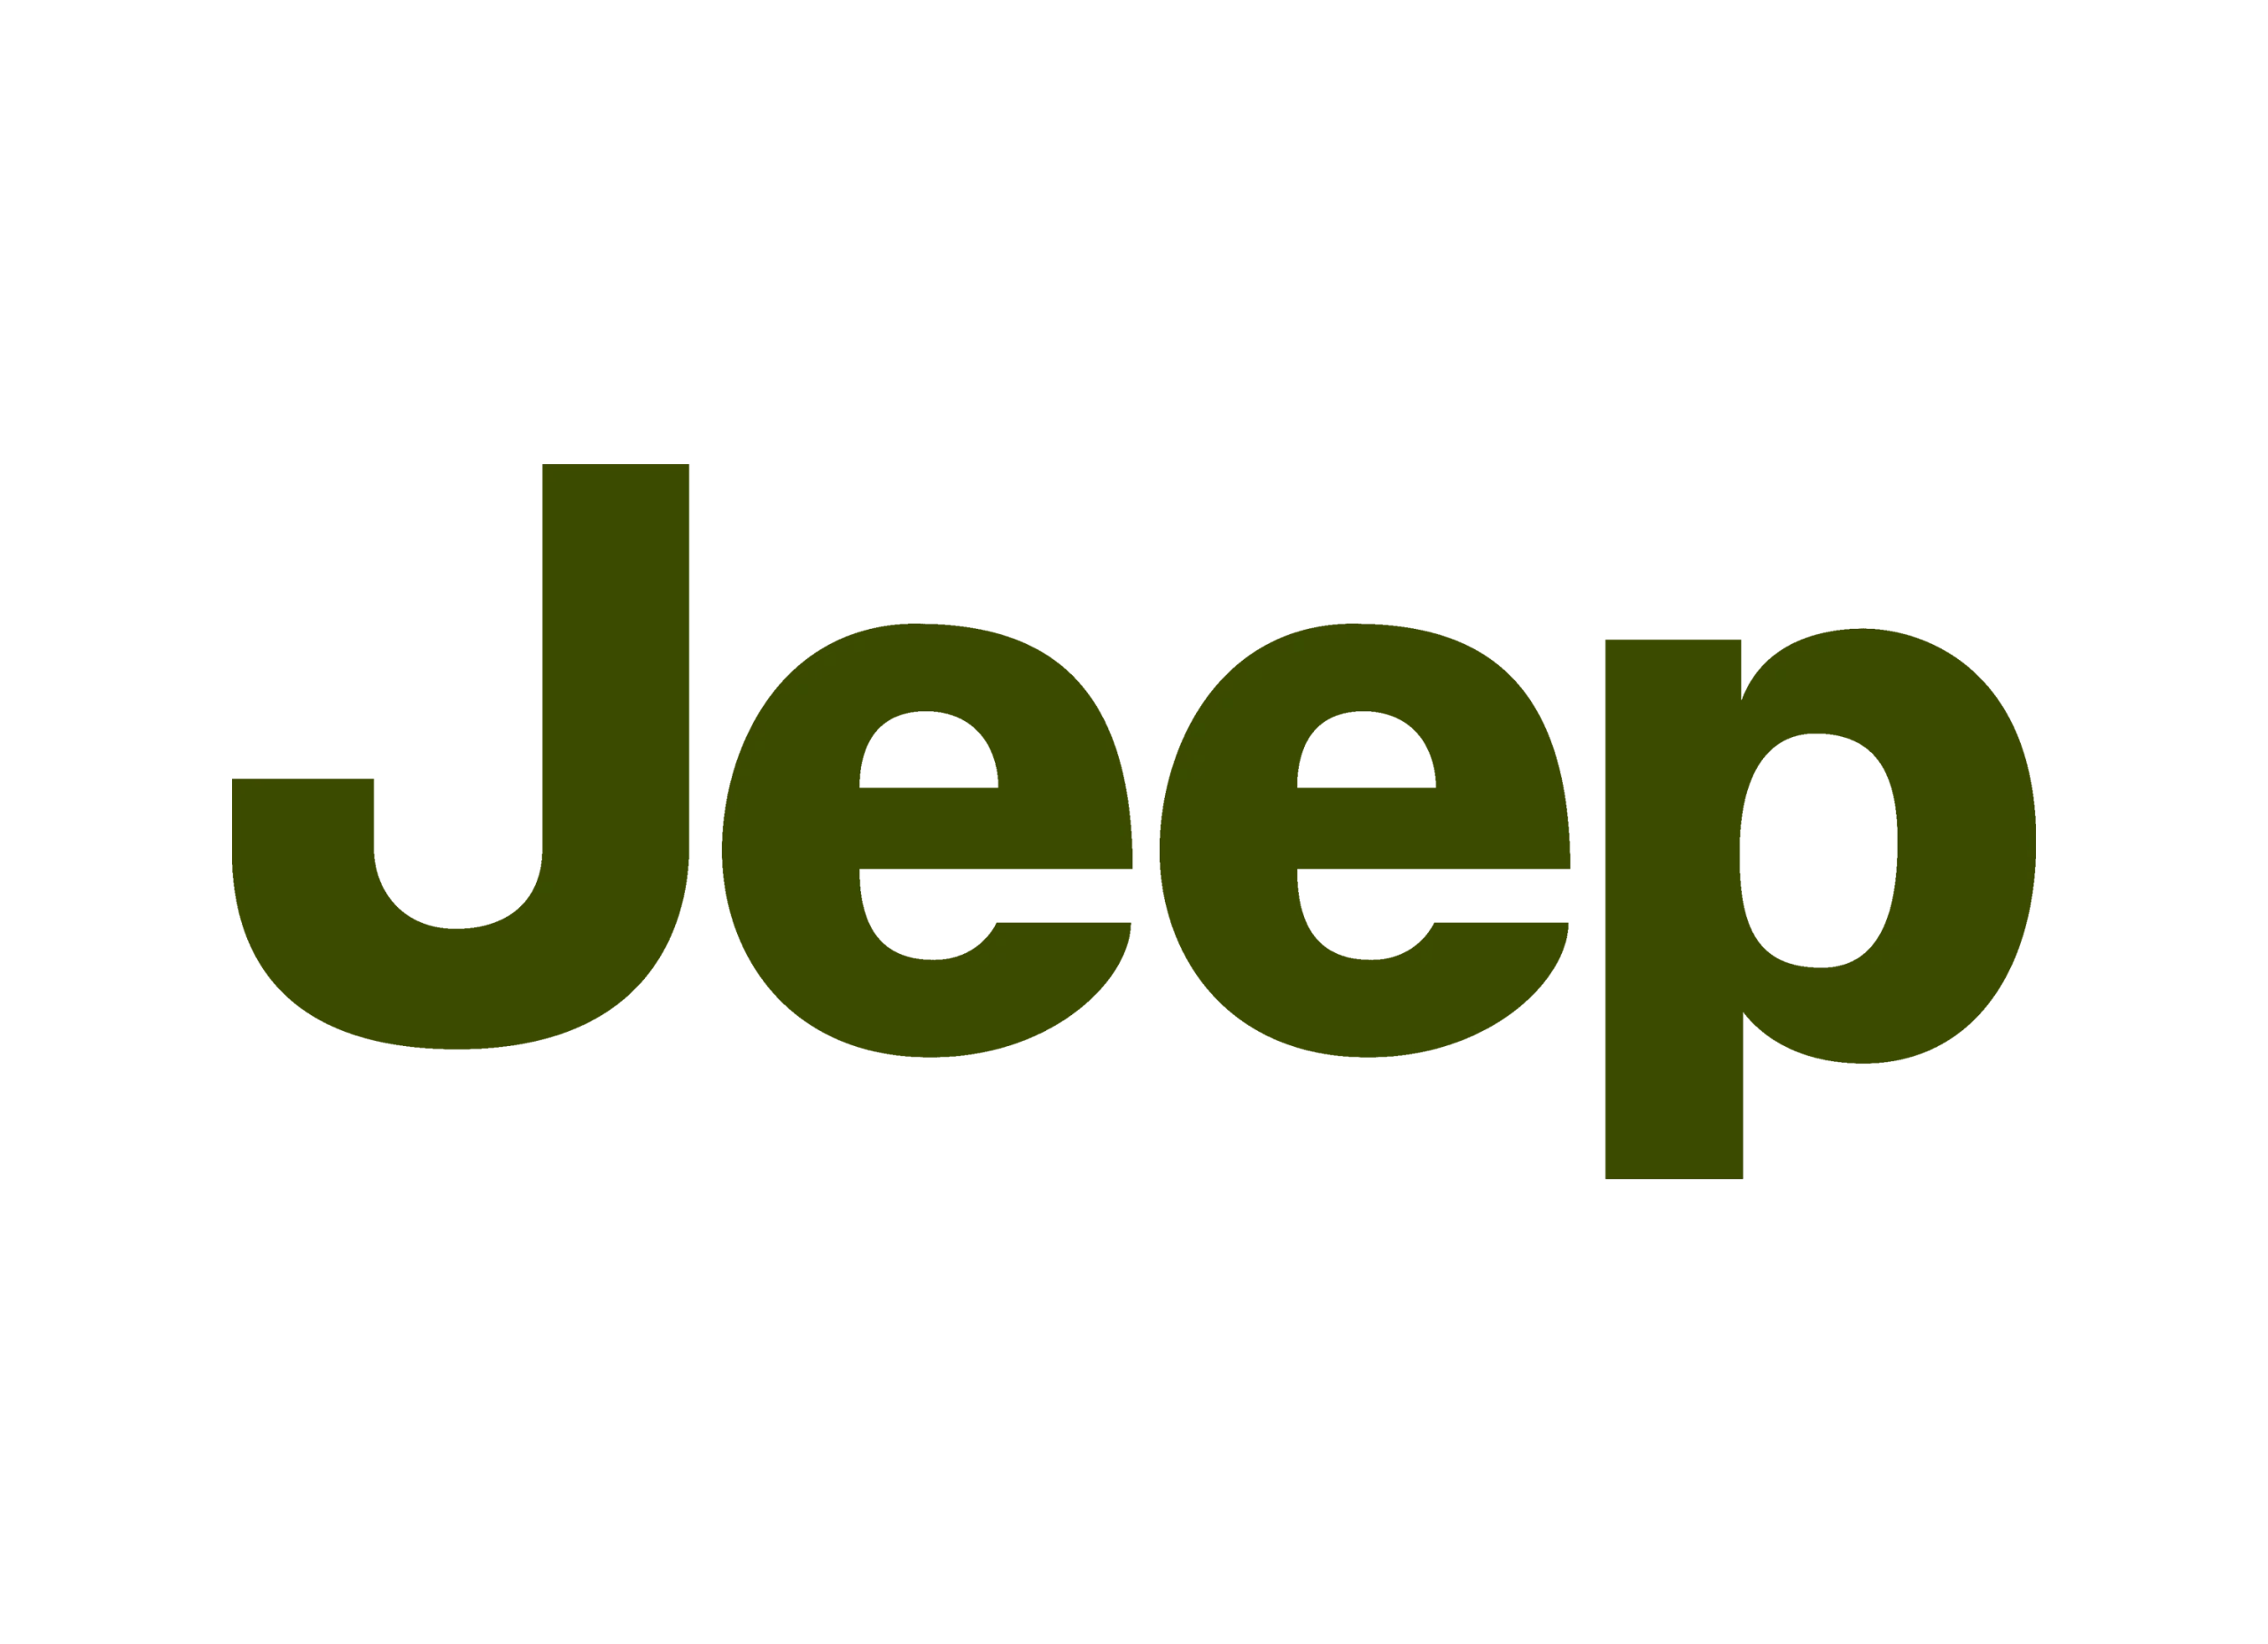 Jeep logo 1993-present